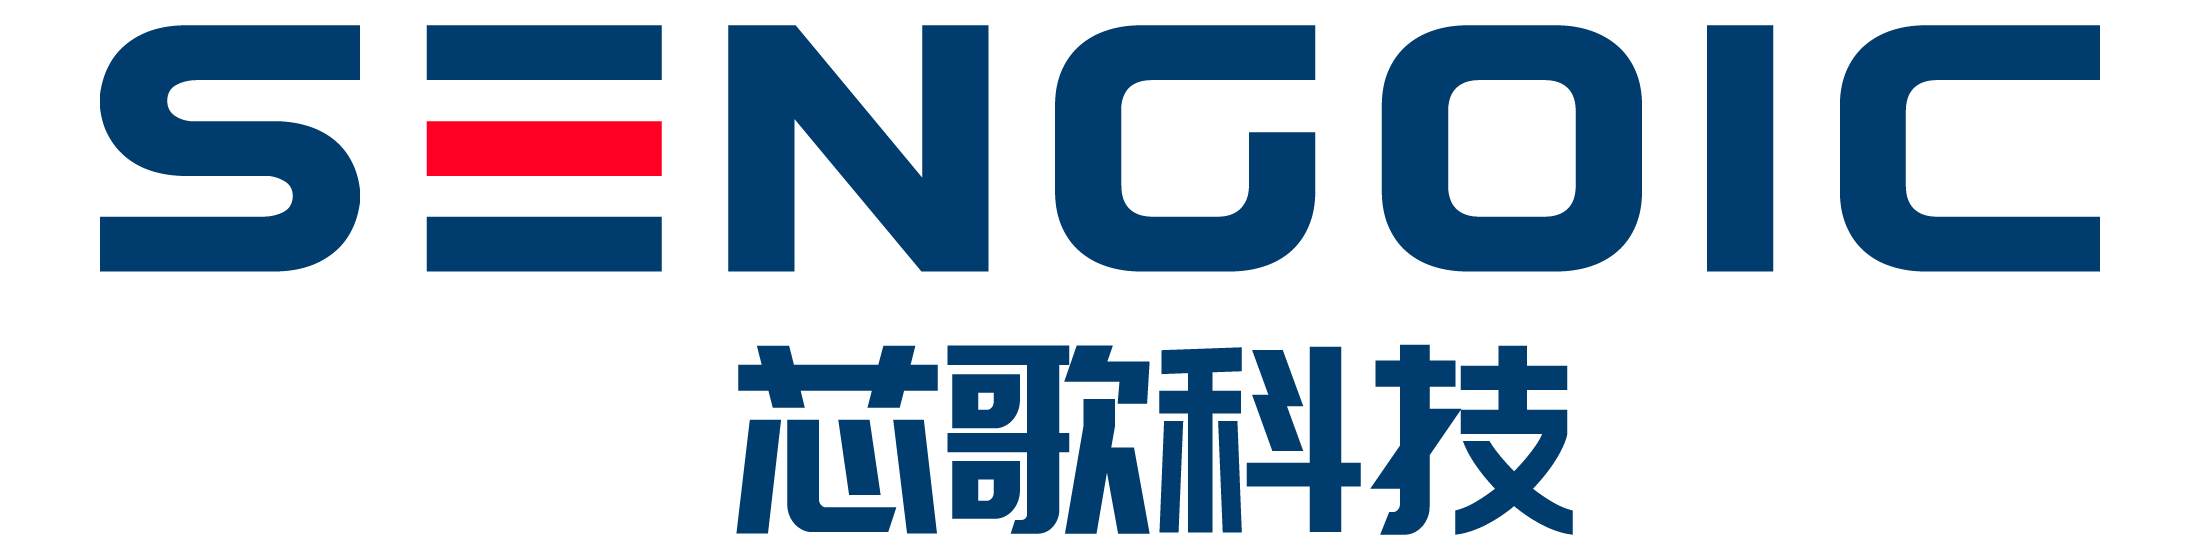 Sengoic(上海芯歌科技)